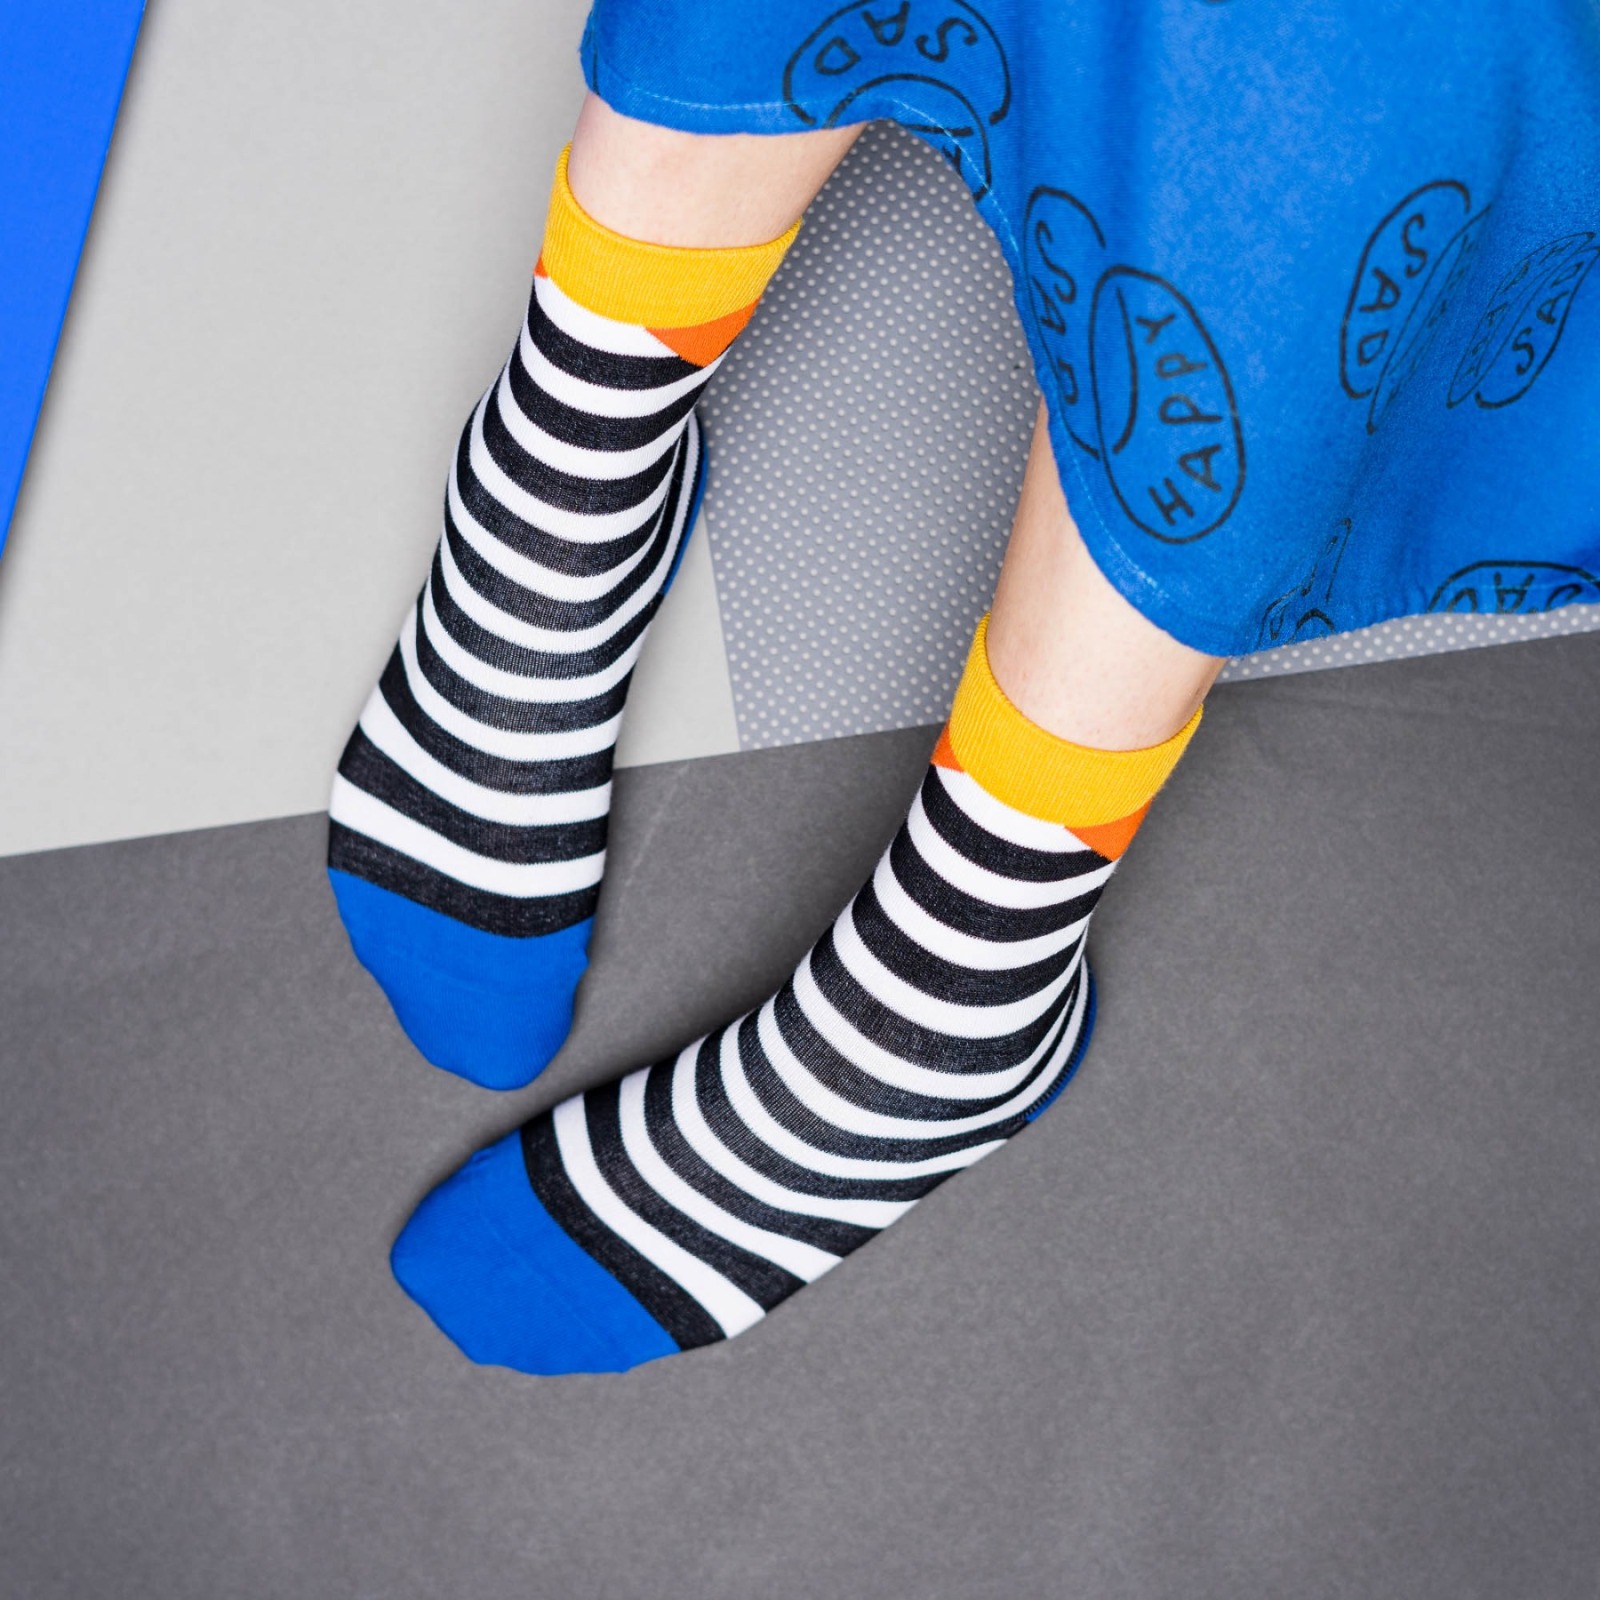 nicenicenice - nice socks block stripes red blue yellow 4